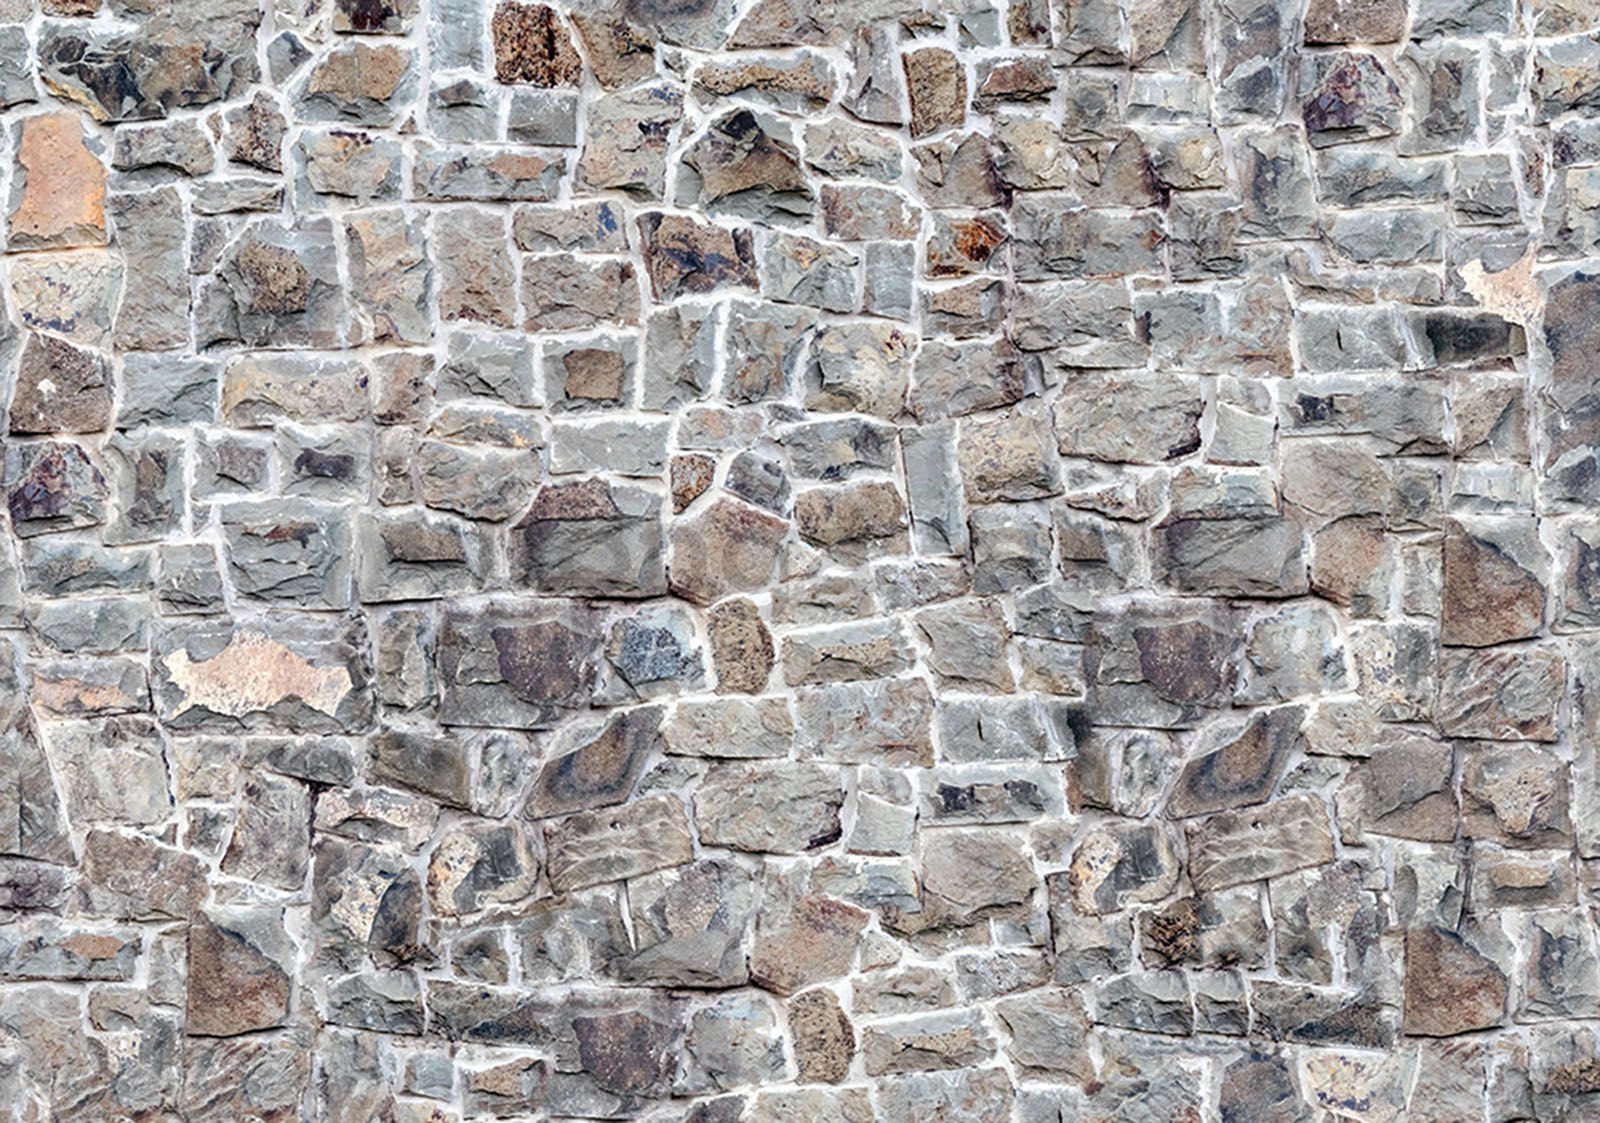 Fototapeta vliesová: Kamenná zeď (7) - 368x254 cm